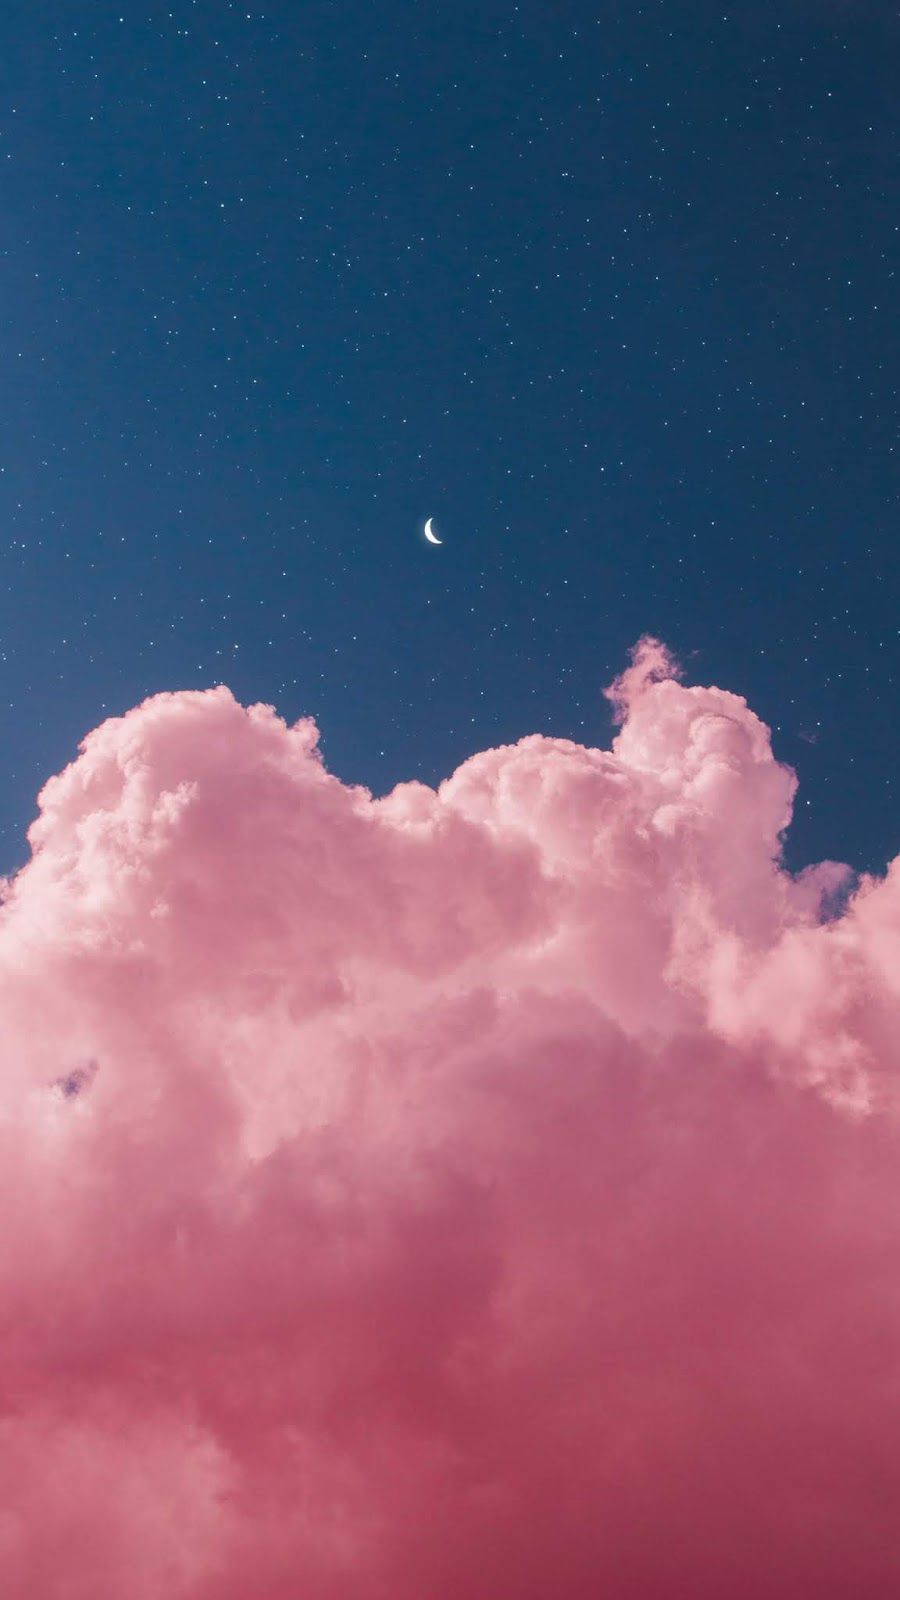 Night sky. Night sky wallpaper, iPhone wallpaper sky, Pink clouds wallpaper